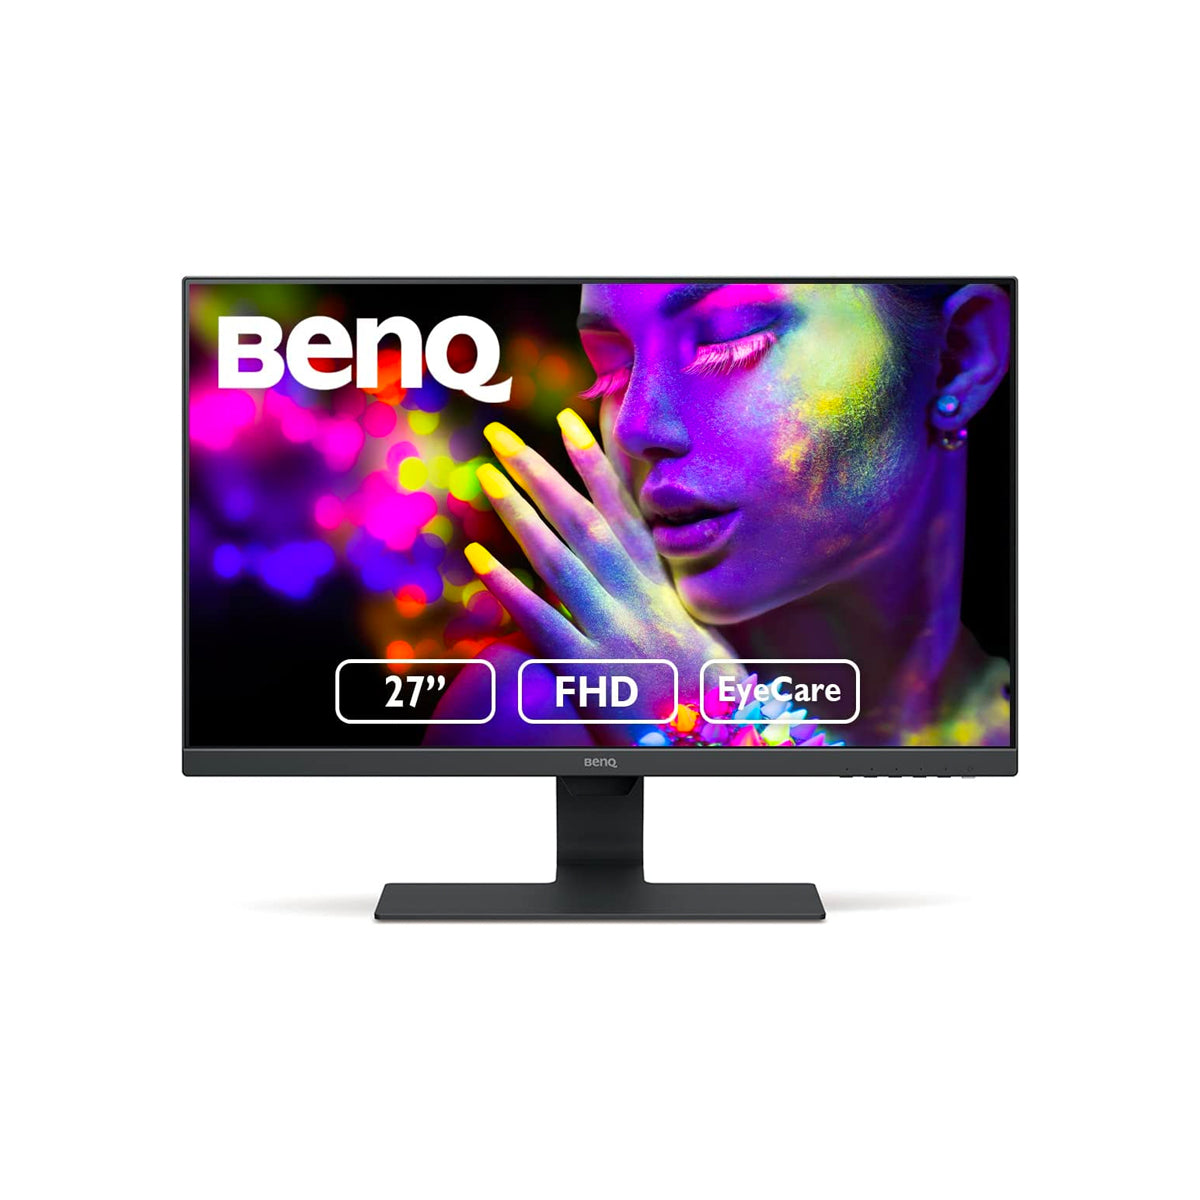 Buy BenQ GW2780 27 inch, 1080p , Eye-care Technology Monitor at